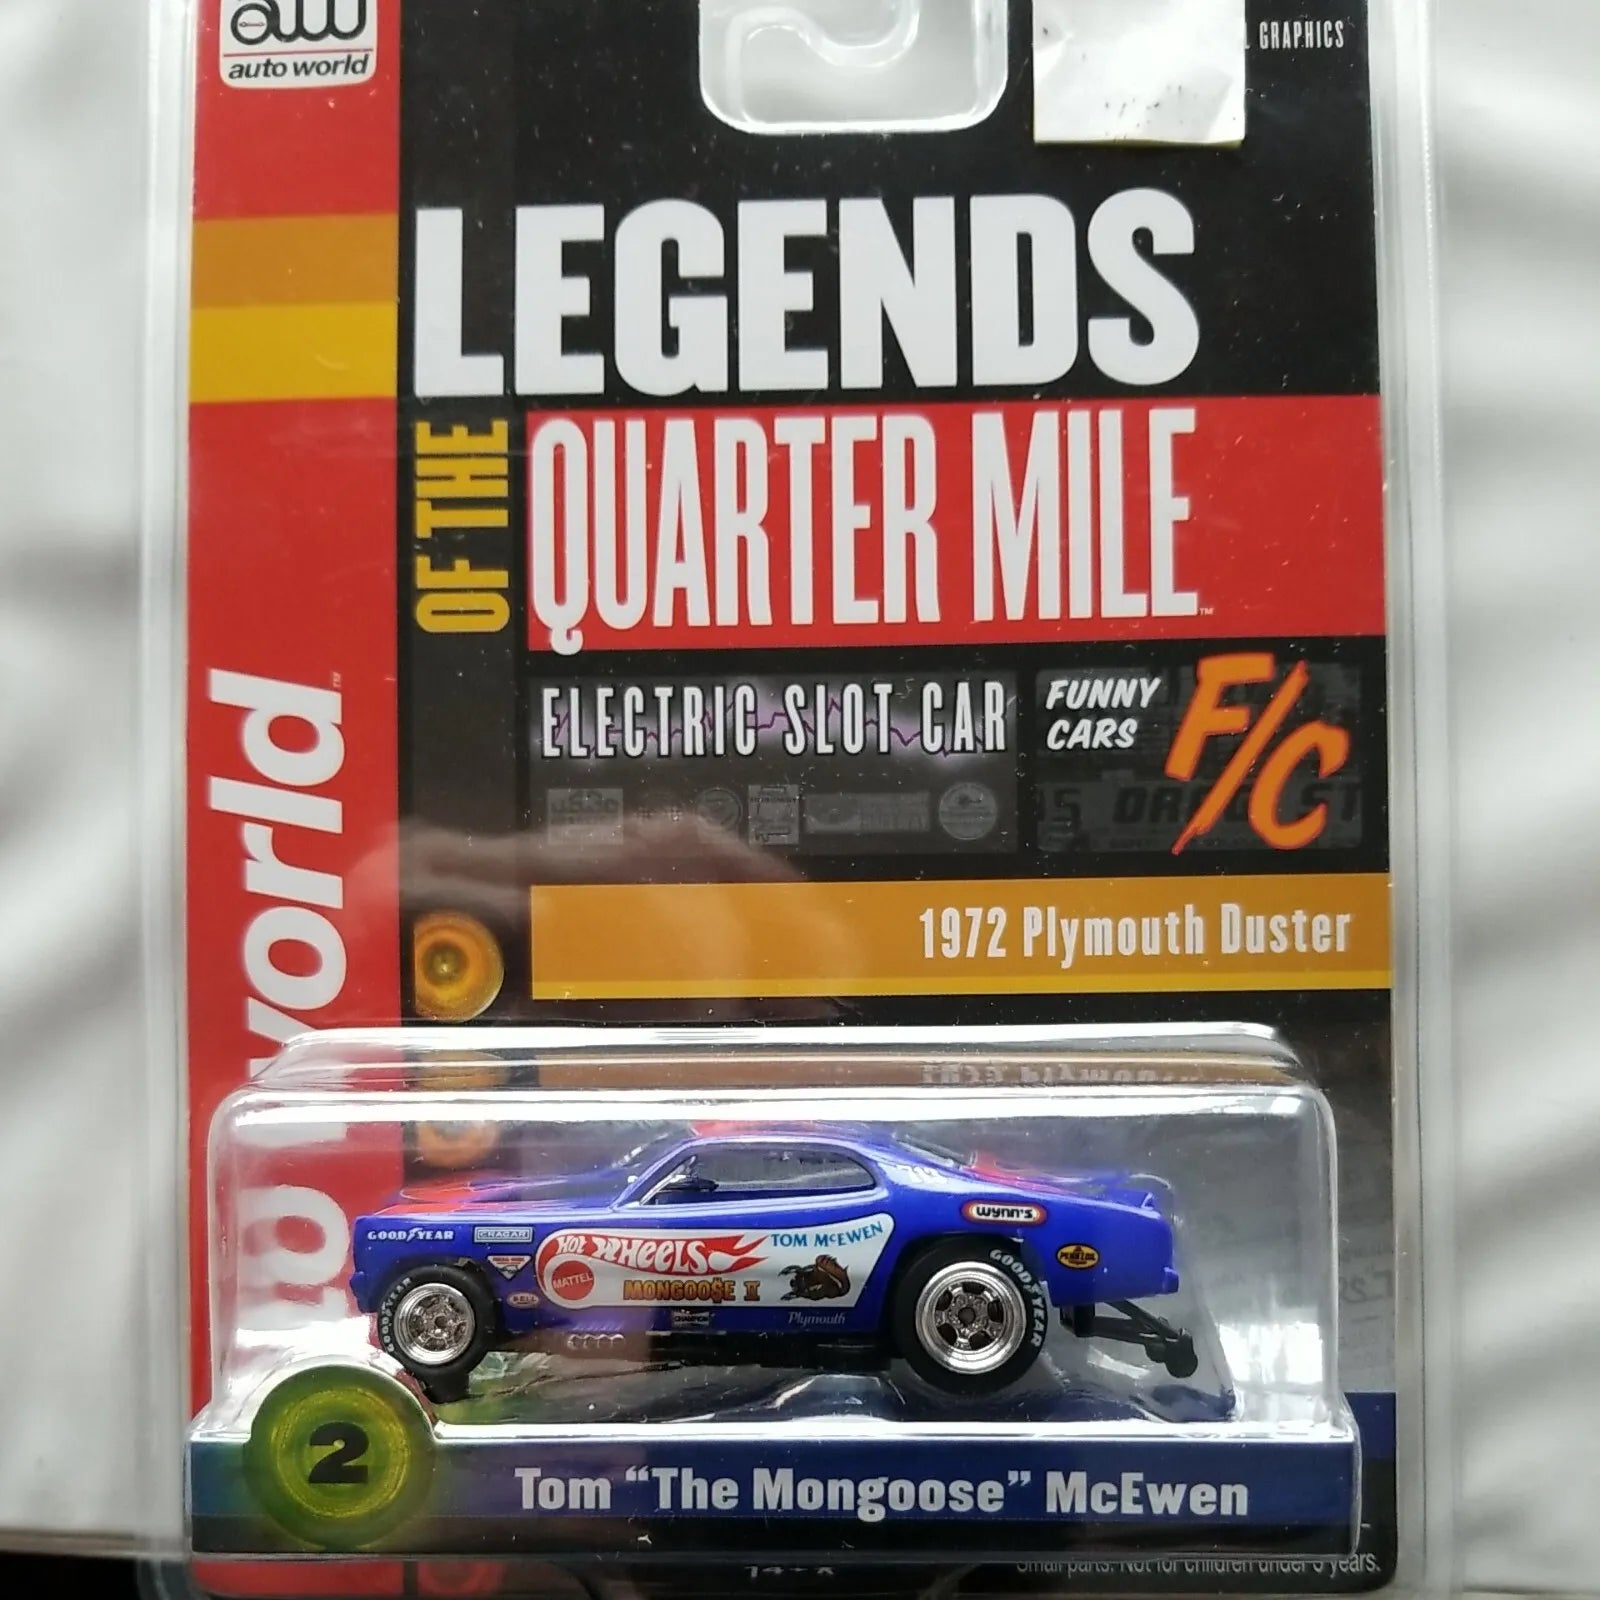 AW Legends Of The Quarter Mile, Tom “The Mongoose” McEwen 4 Gear Slot Car